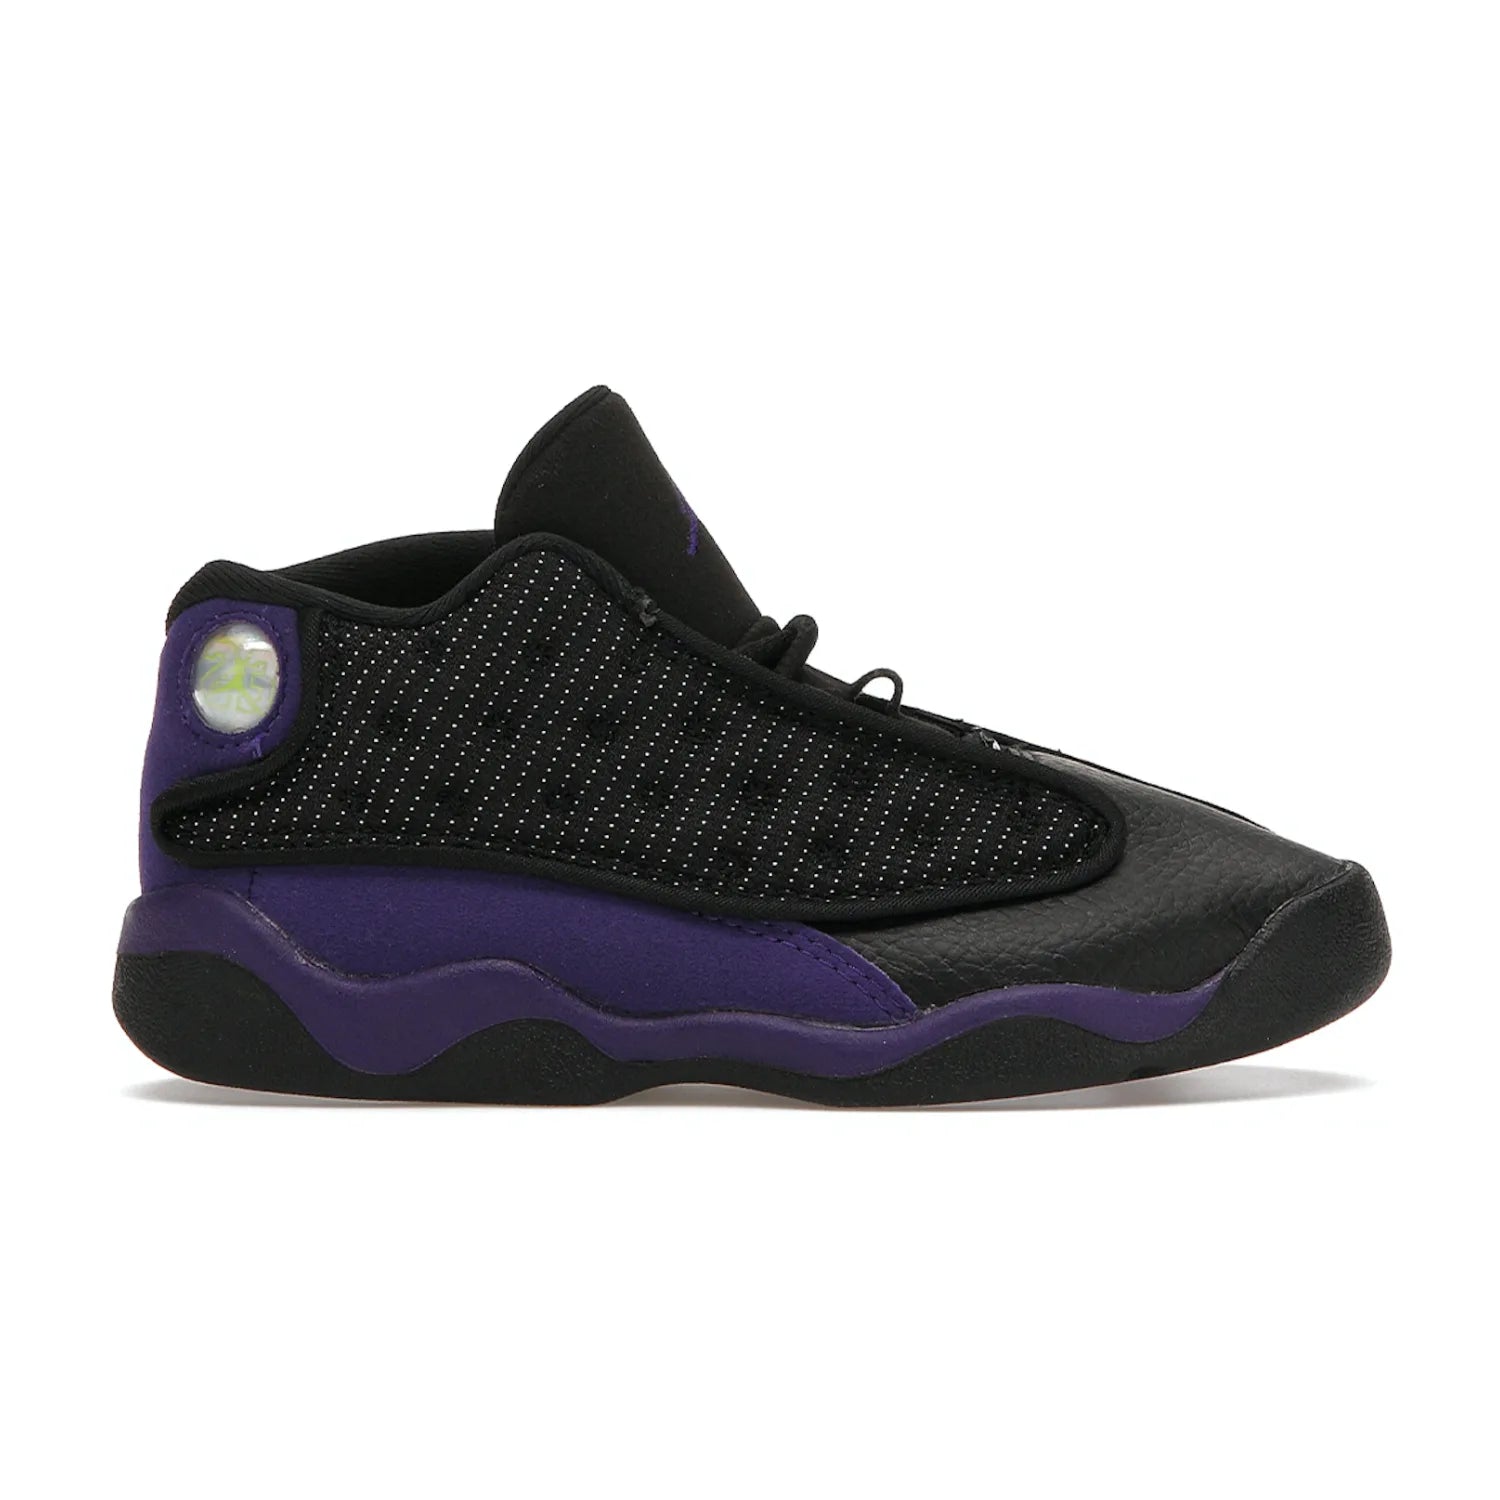 Jordan 13 Retro Court Purple (TD)